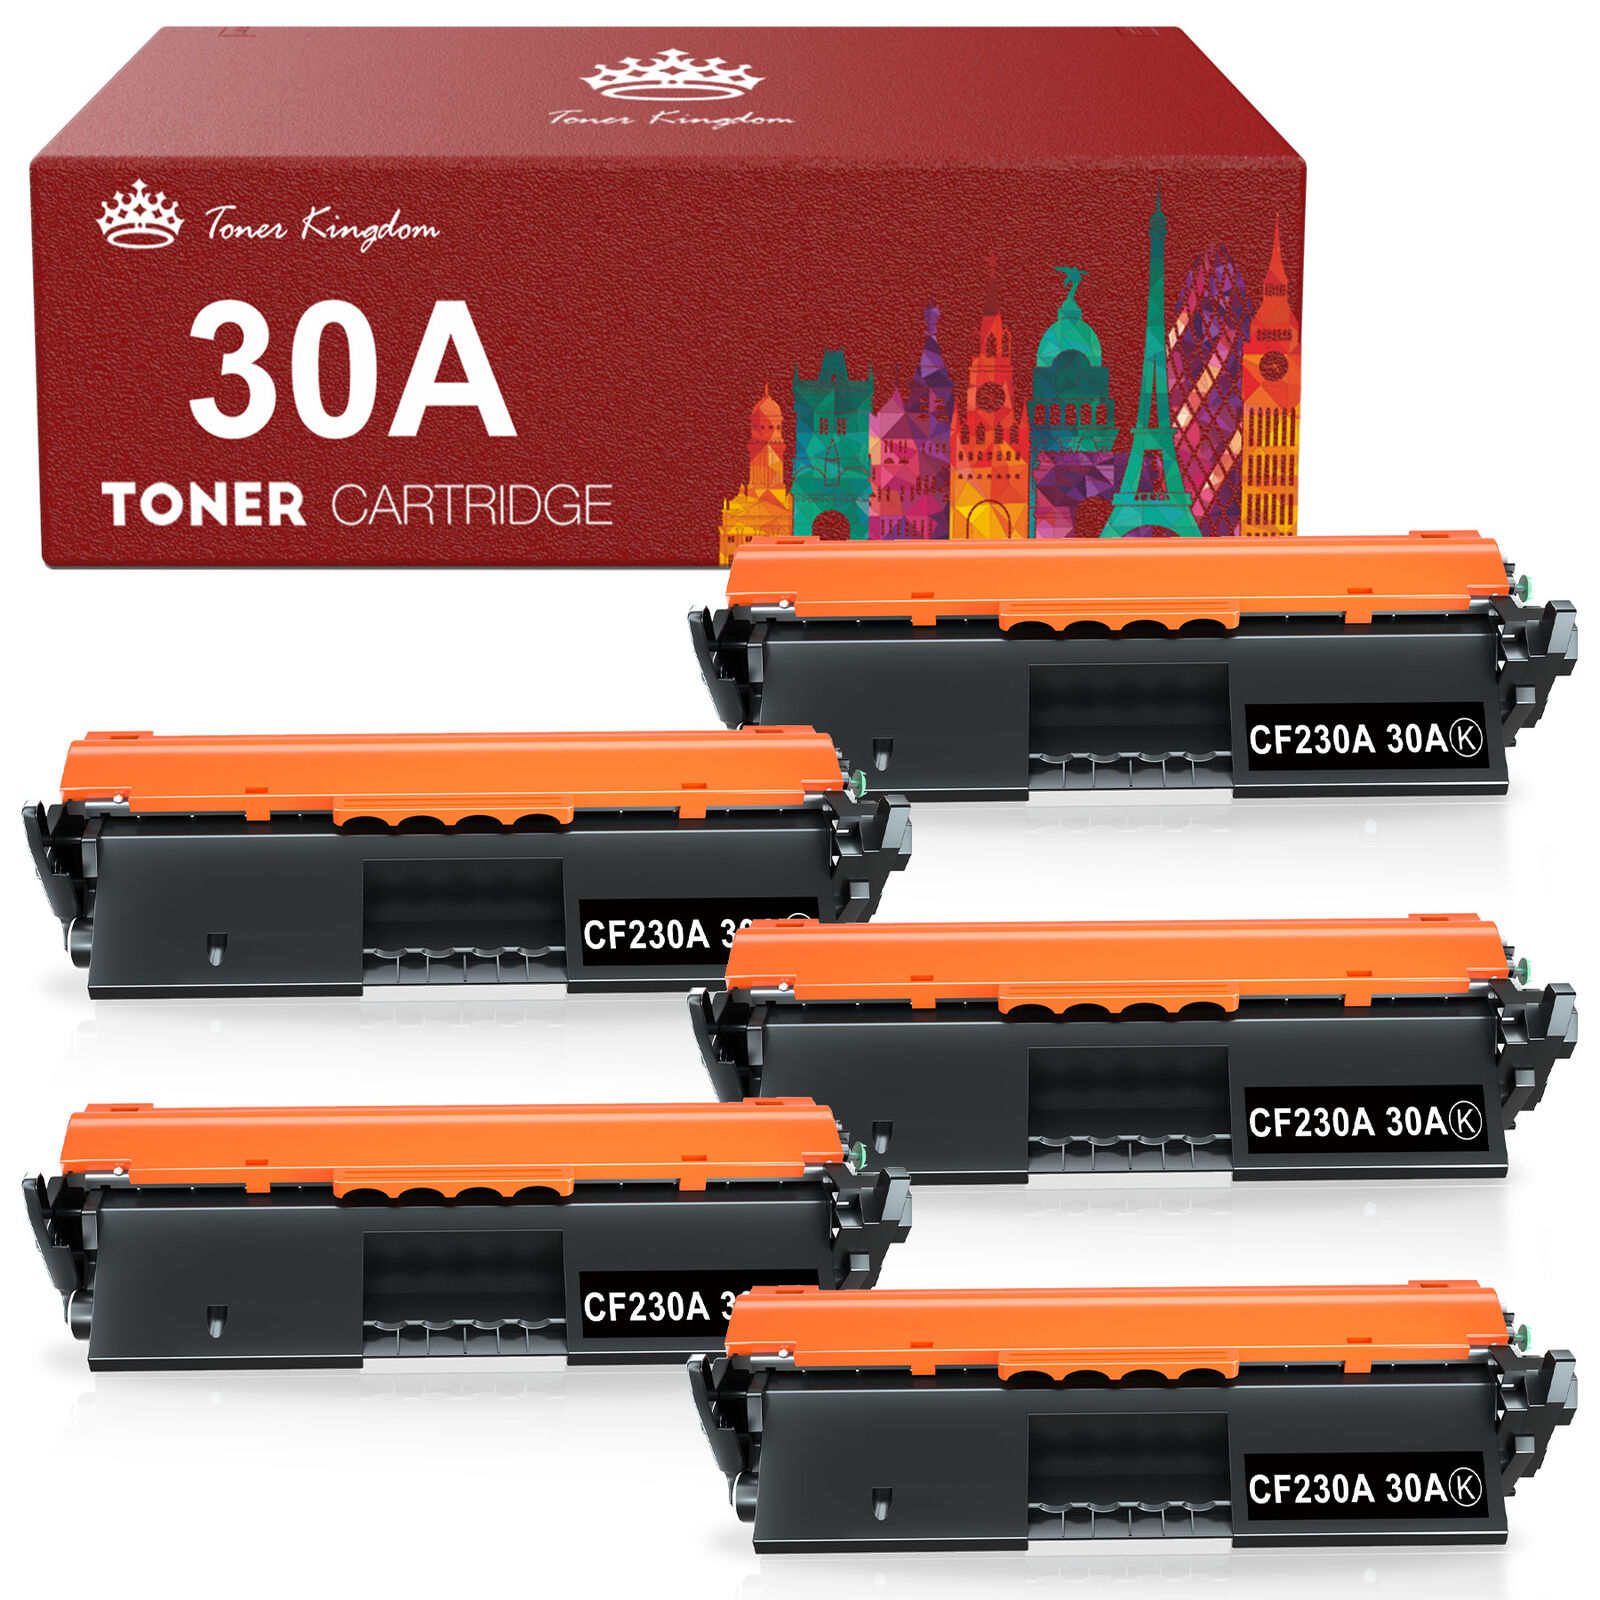 5 Pack Toner Cartridge CF230A For HP LaserJet pro MFP M227fdn M227fdw M227sdn